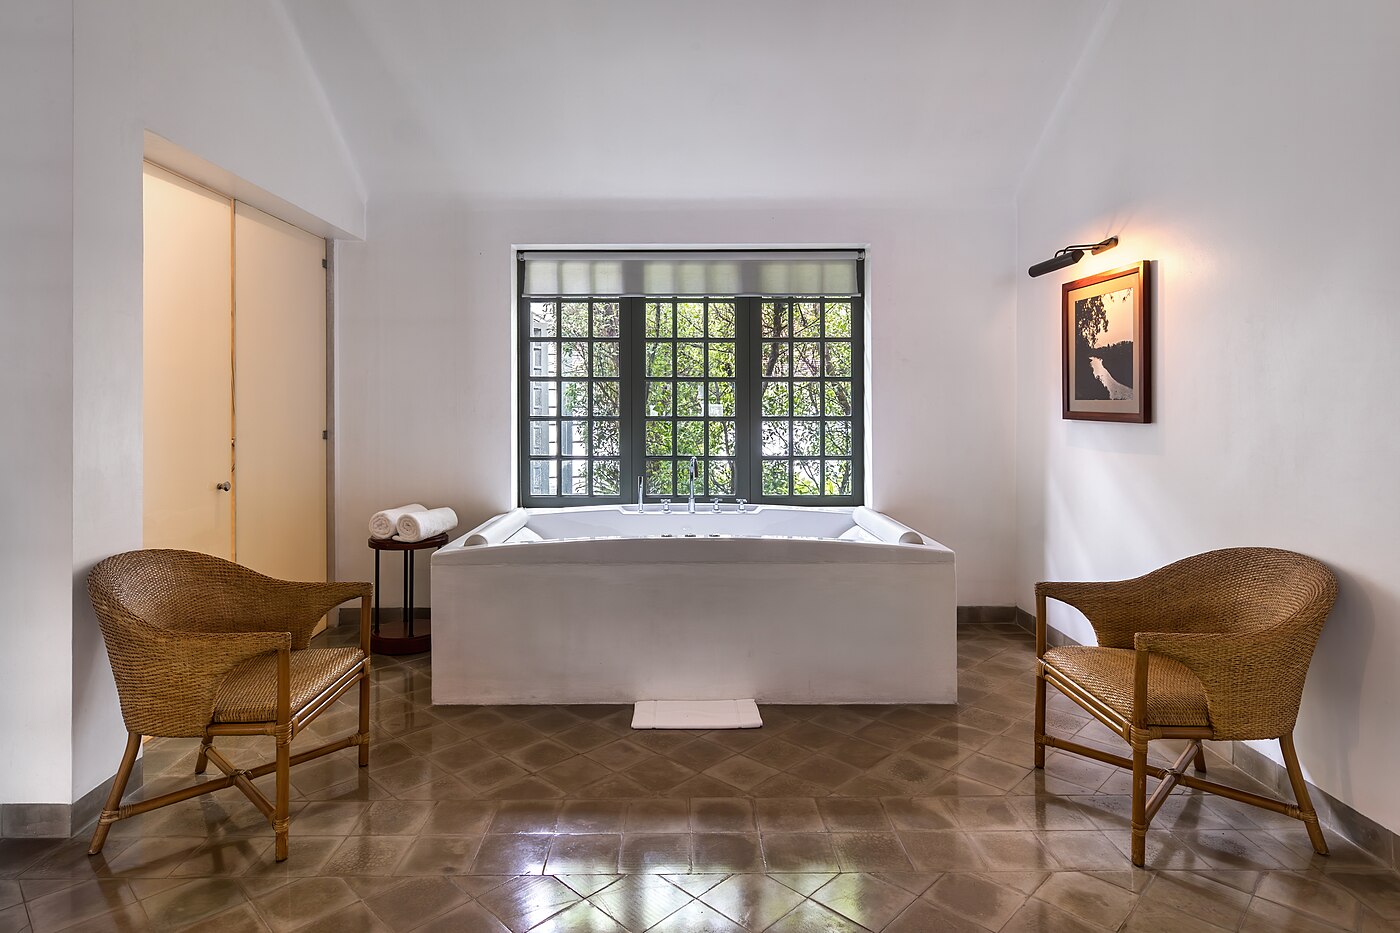 Spa bath and chairs in Amantaka luxury Resort & Hotel in Luang Prabang Laos